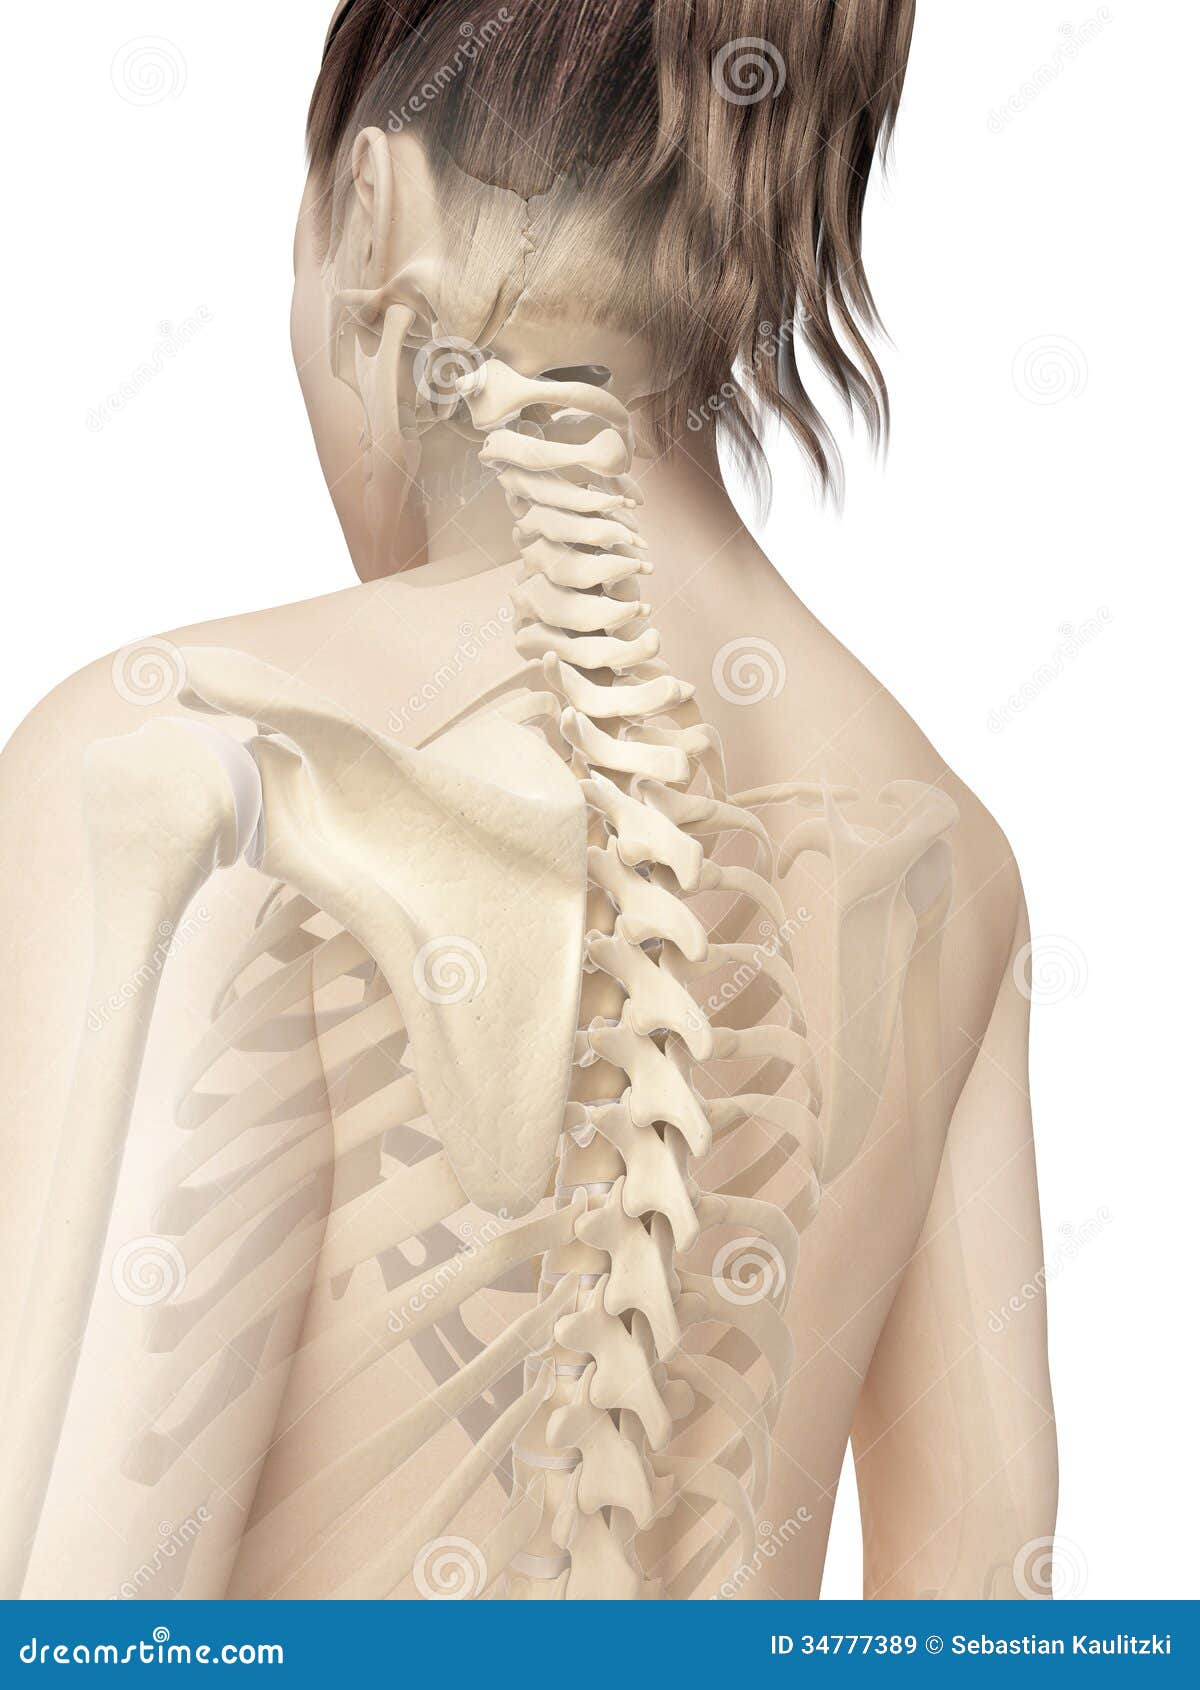 The female skeleton stock illustration. Illustration of anatomical